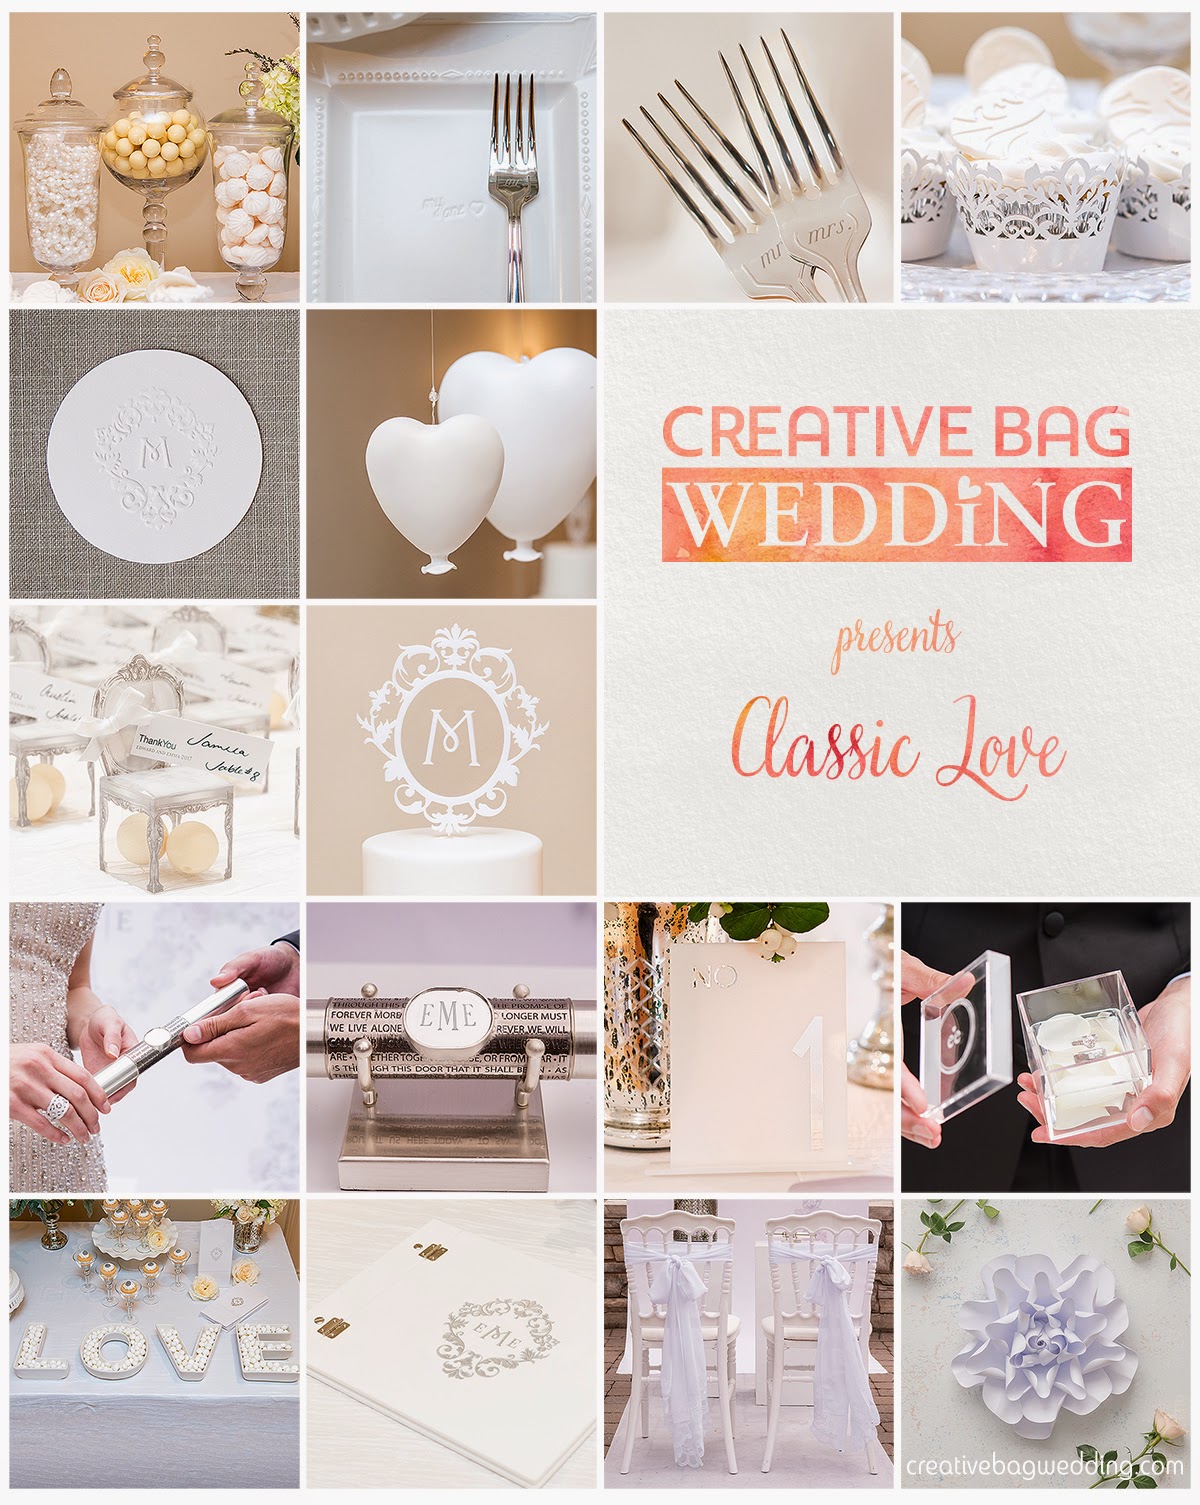 classic love mood boards | Creative Bag Wedding